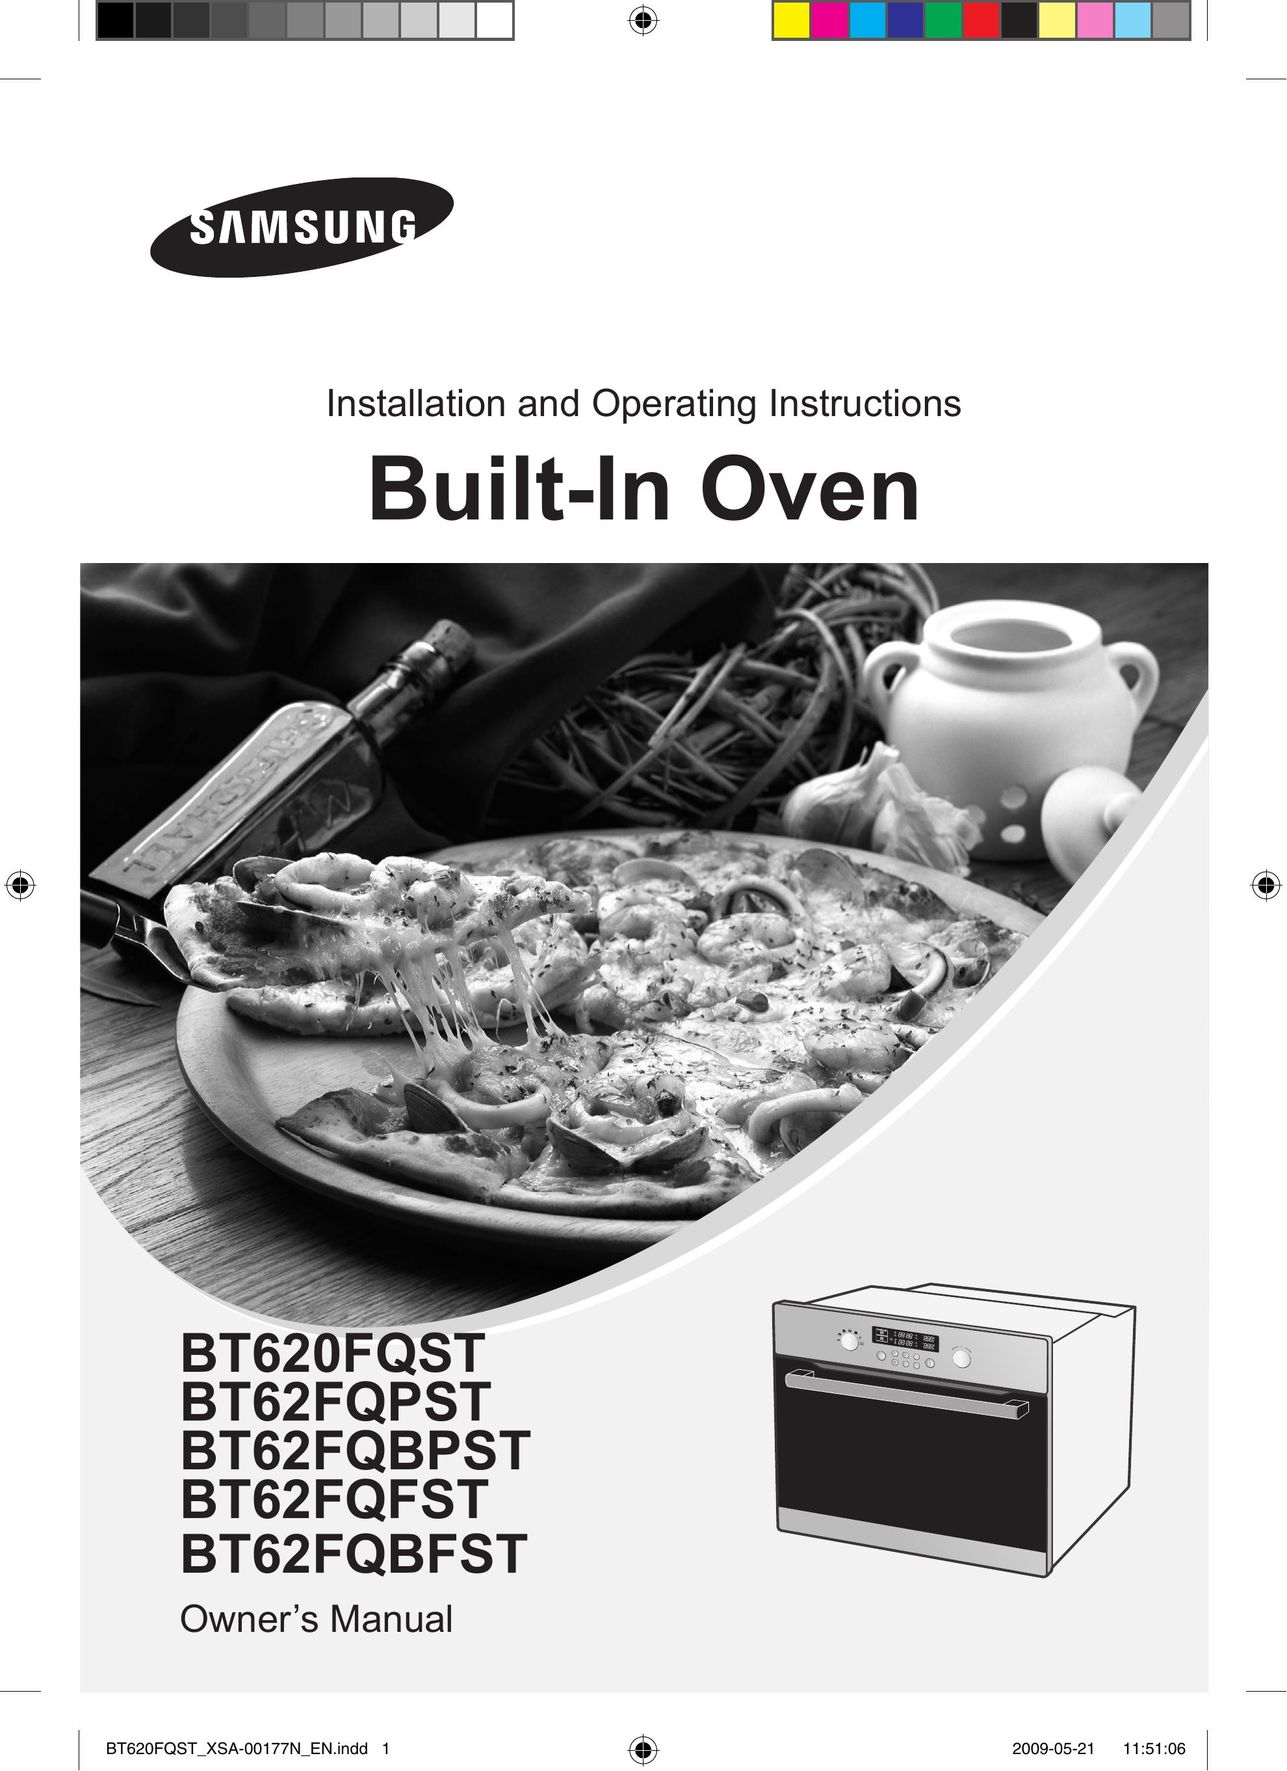 Samsung BT62FQBPST Oven User Manual